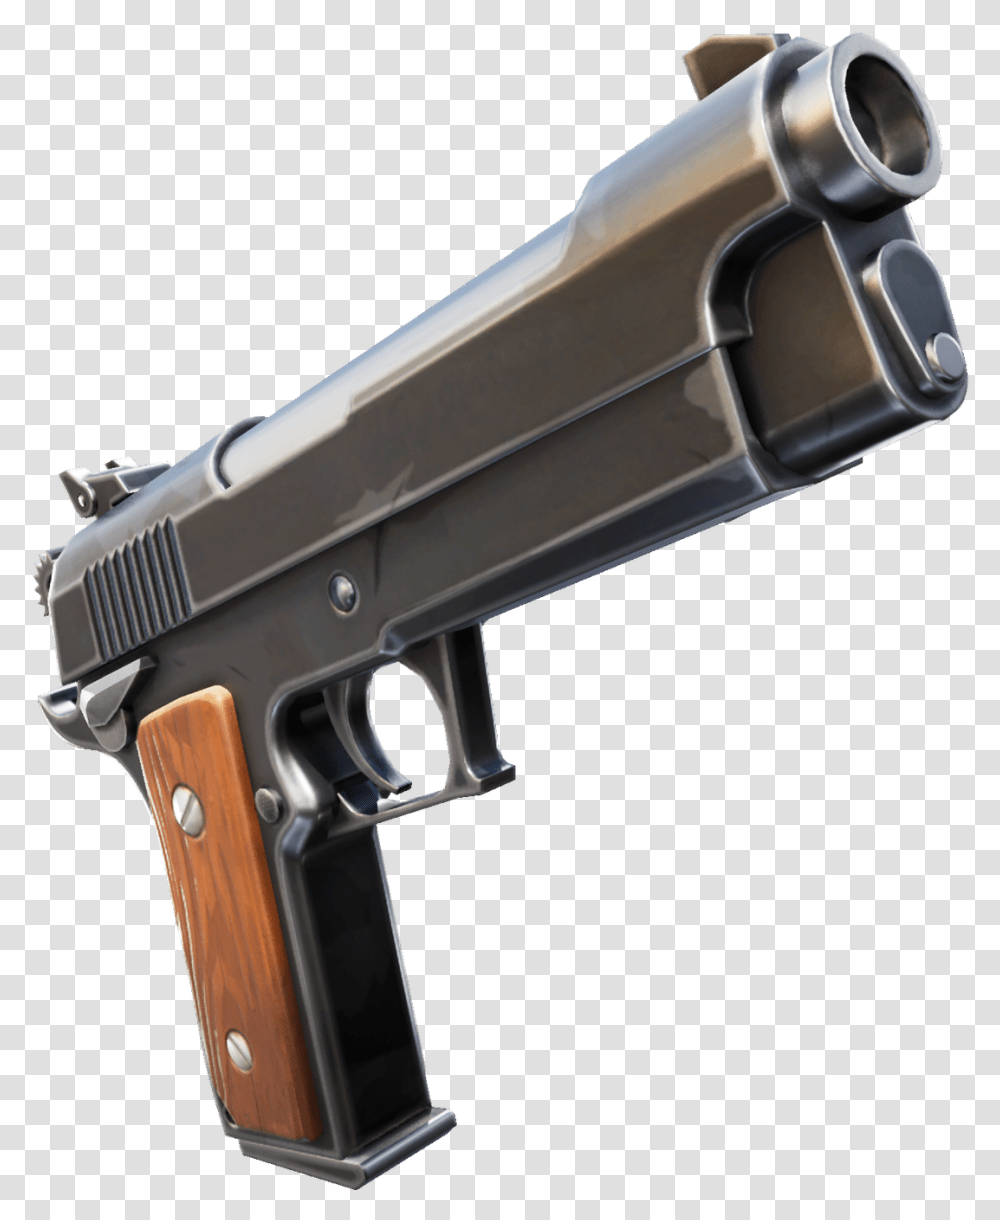 Pistol Fortnite Chapter 2 Guns, Weapon, Weaponry, Handgun Transparent Png